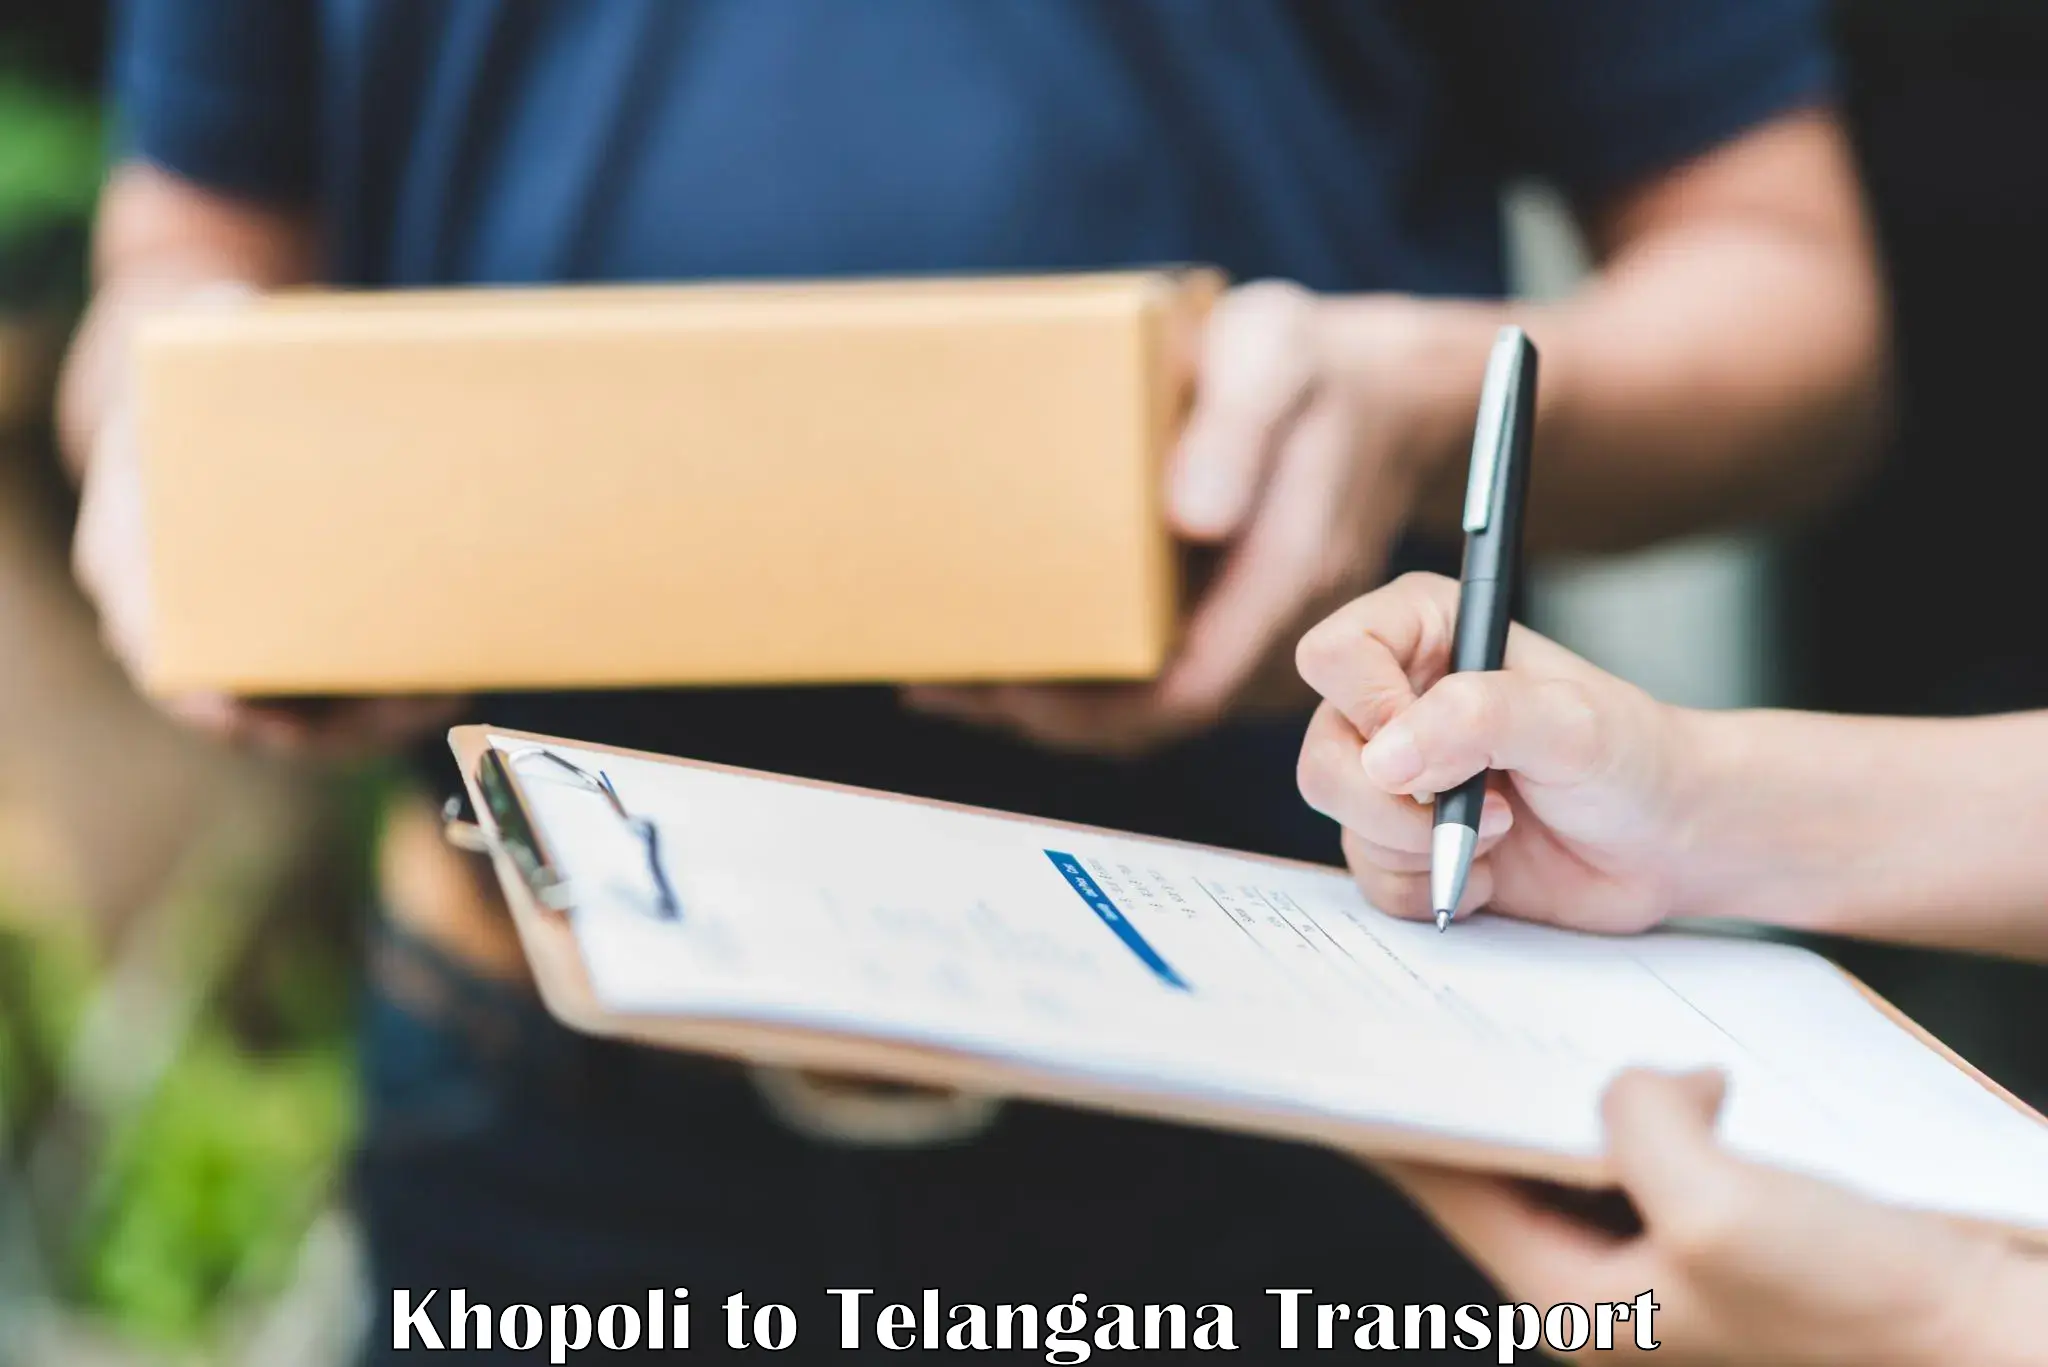 Transport in sharing Khopoli to Amangal